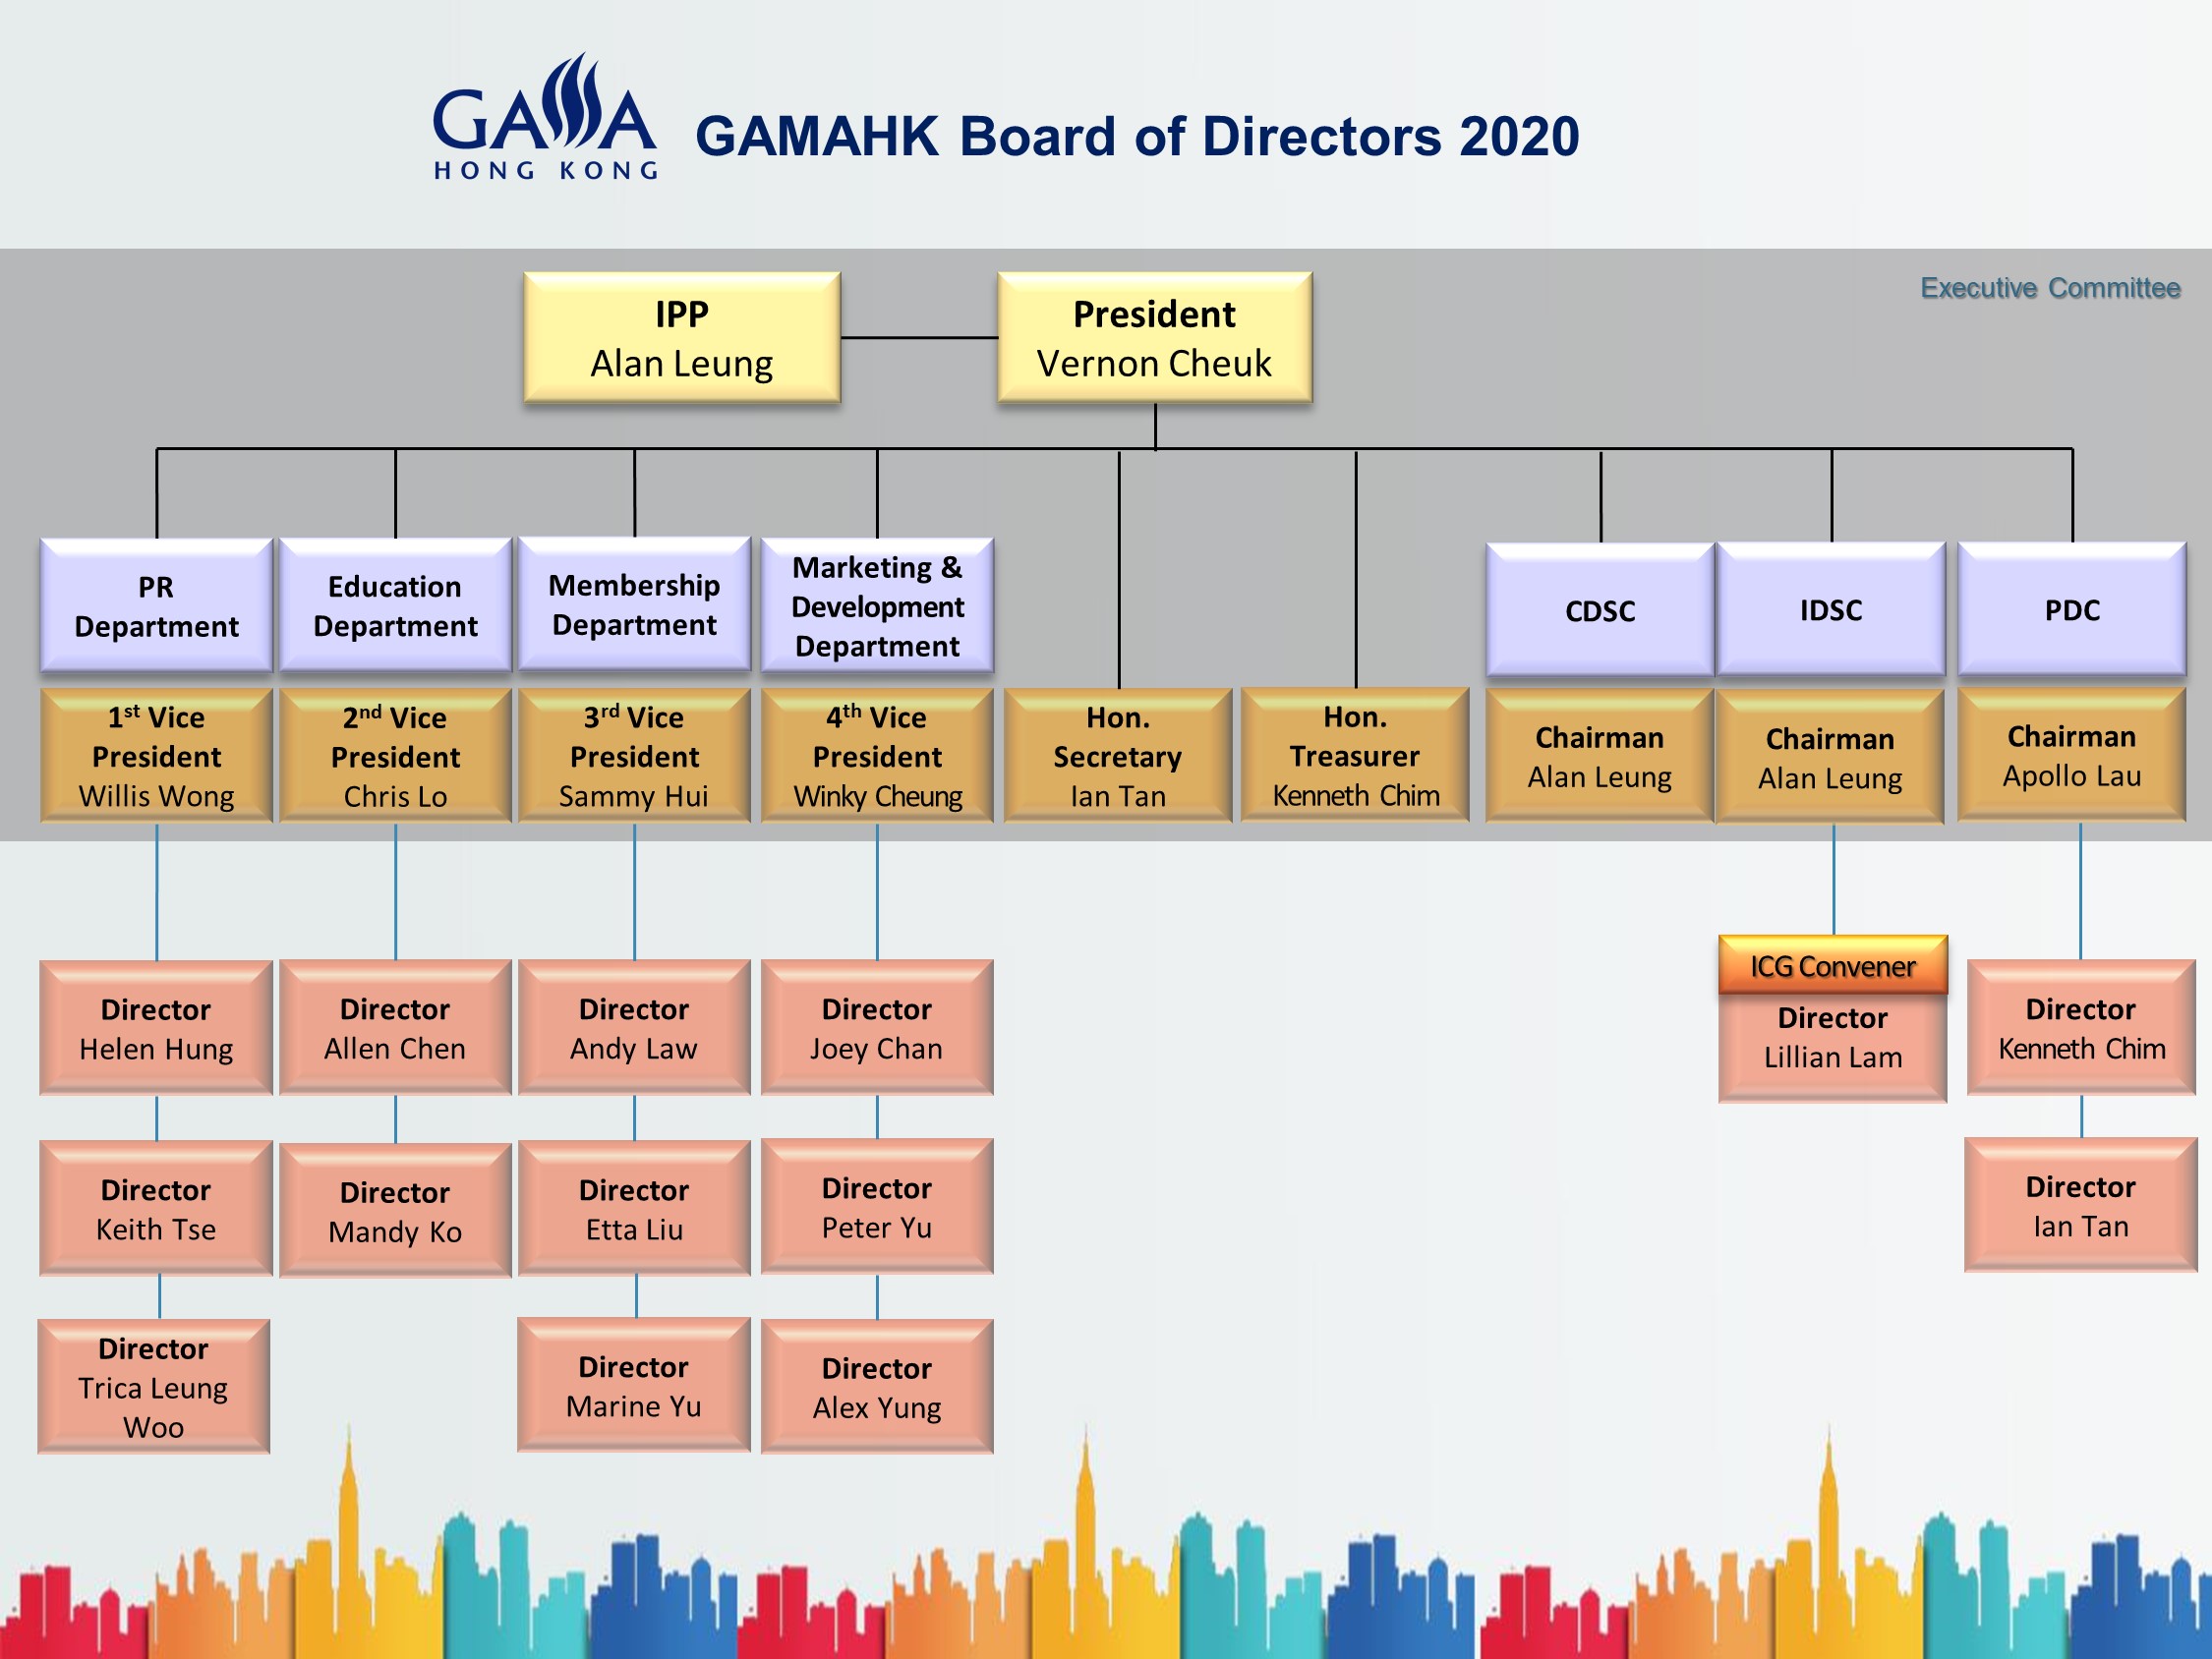 GAMA Board of Directors 2020